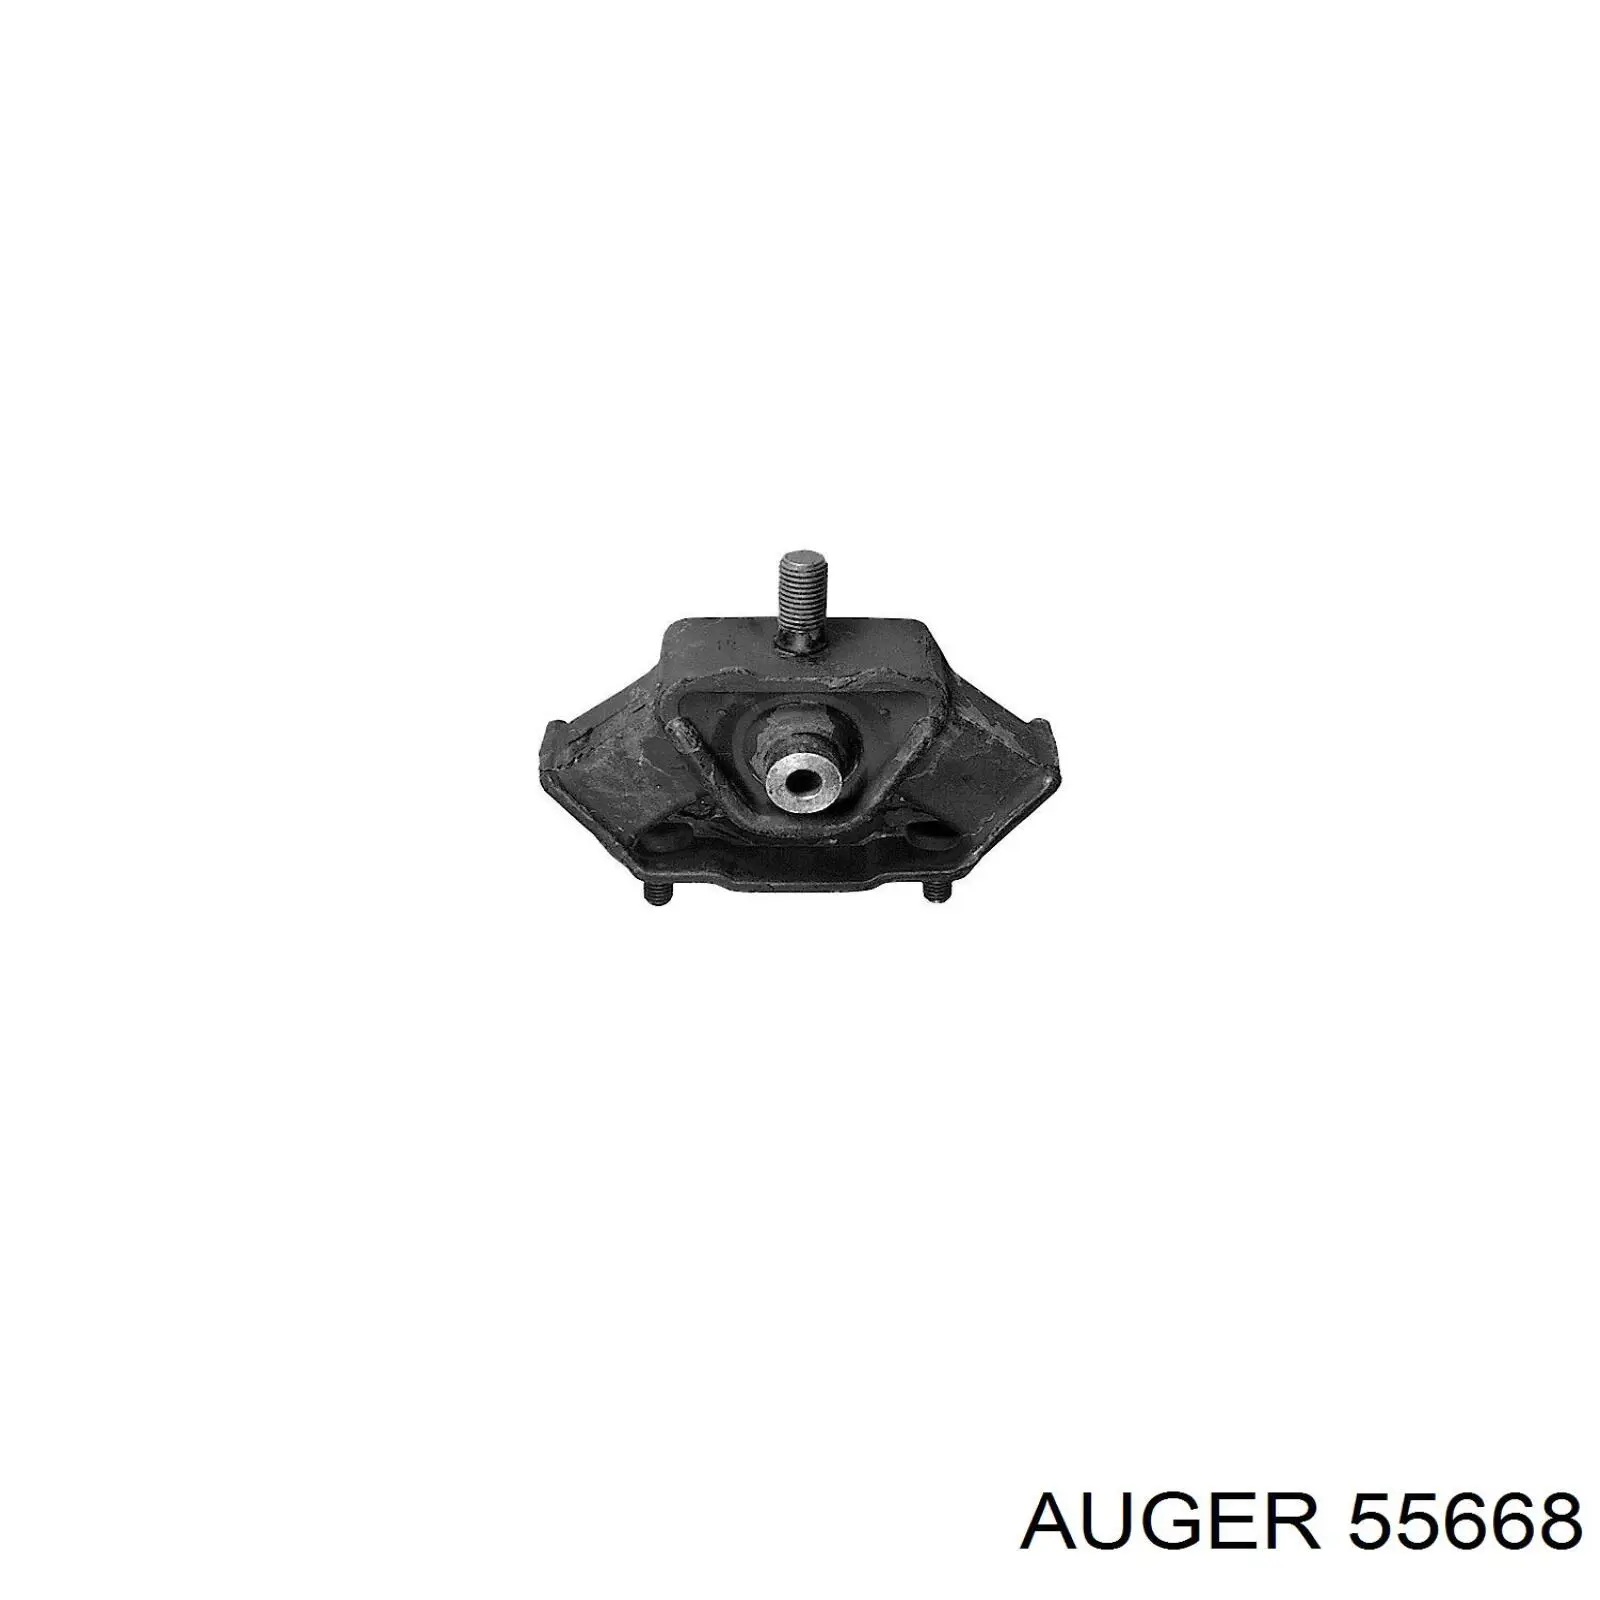 55668 Auger montaje de transmision (montaje de caja de cambios)